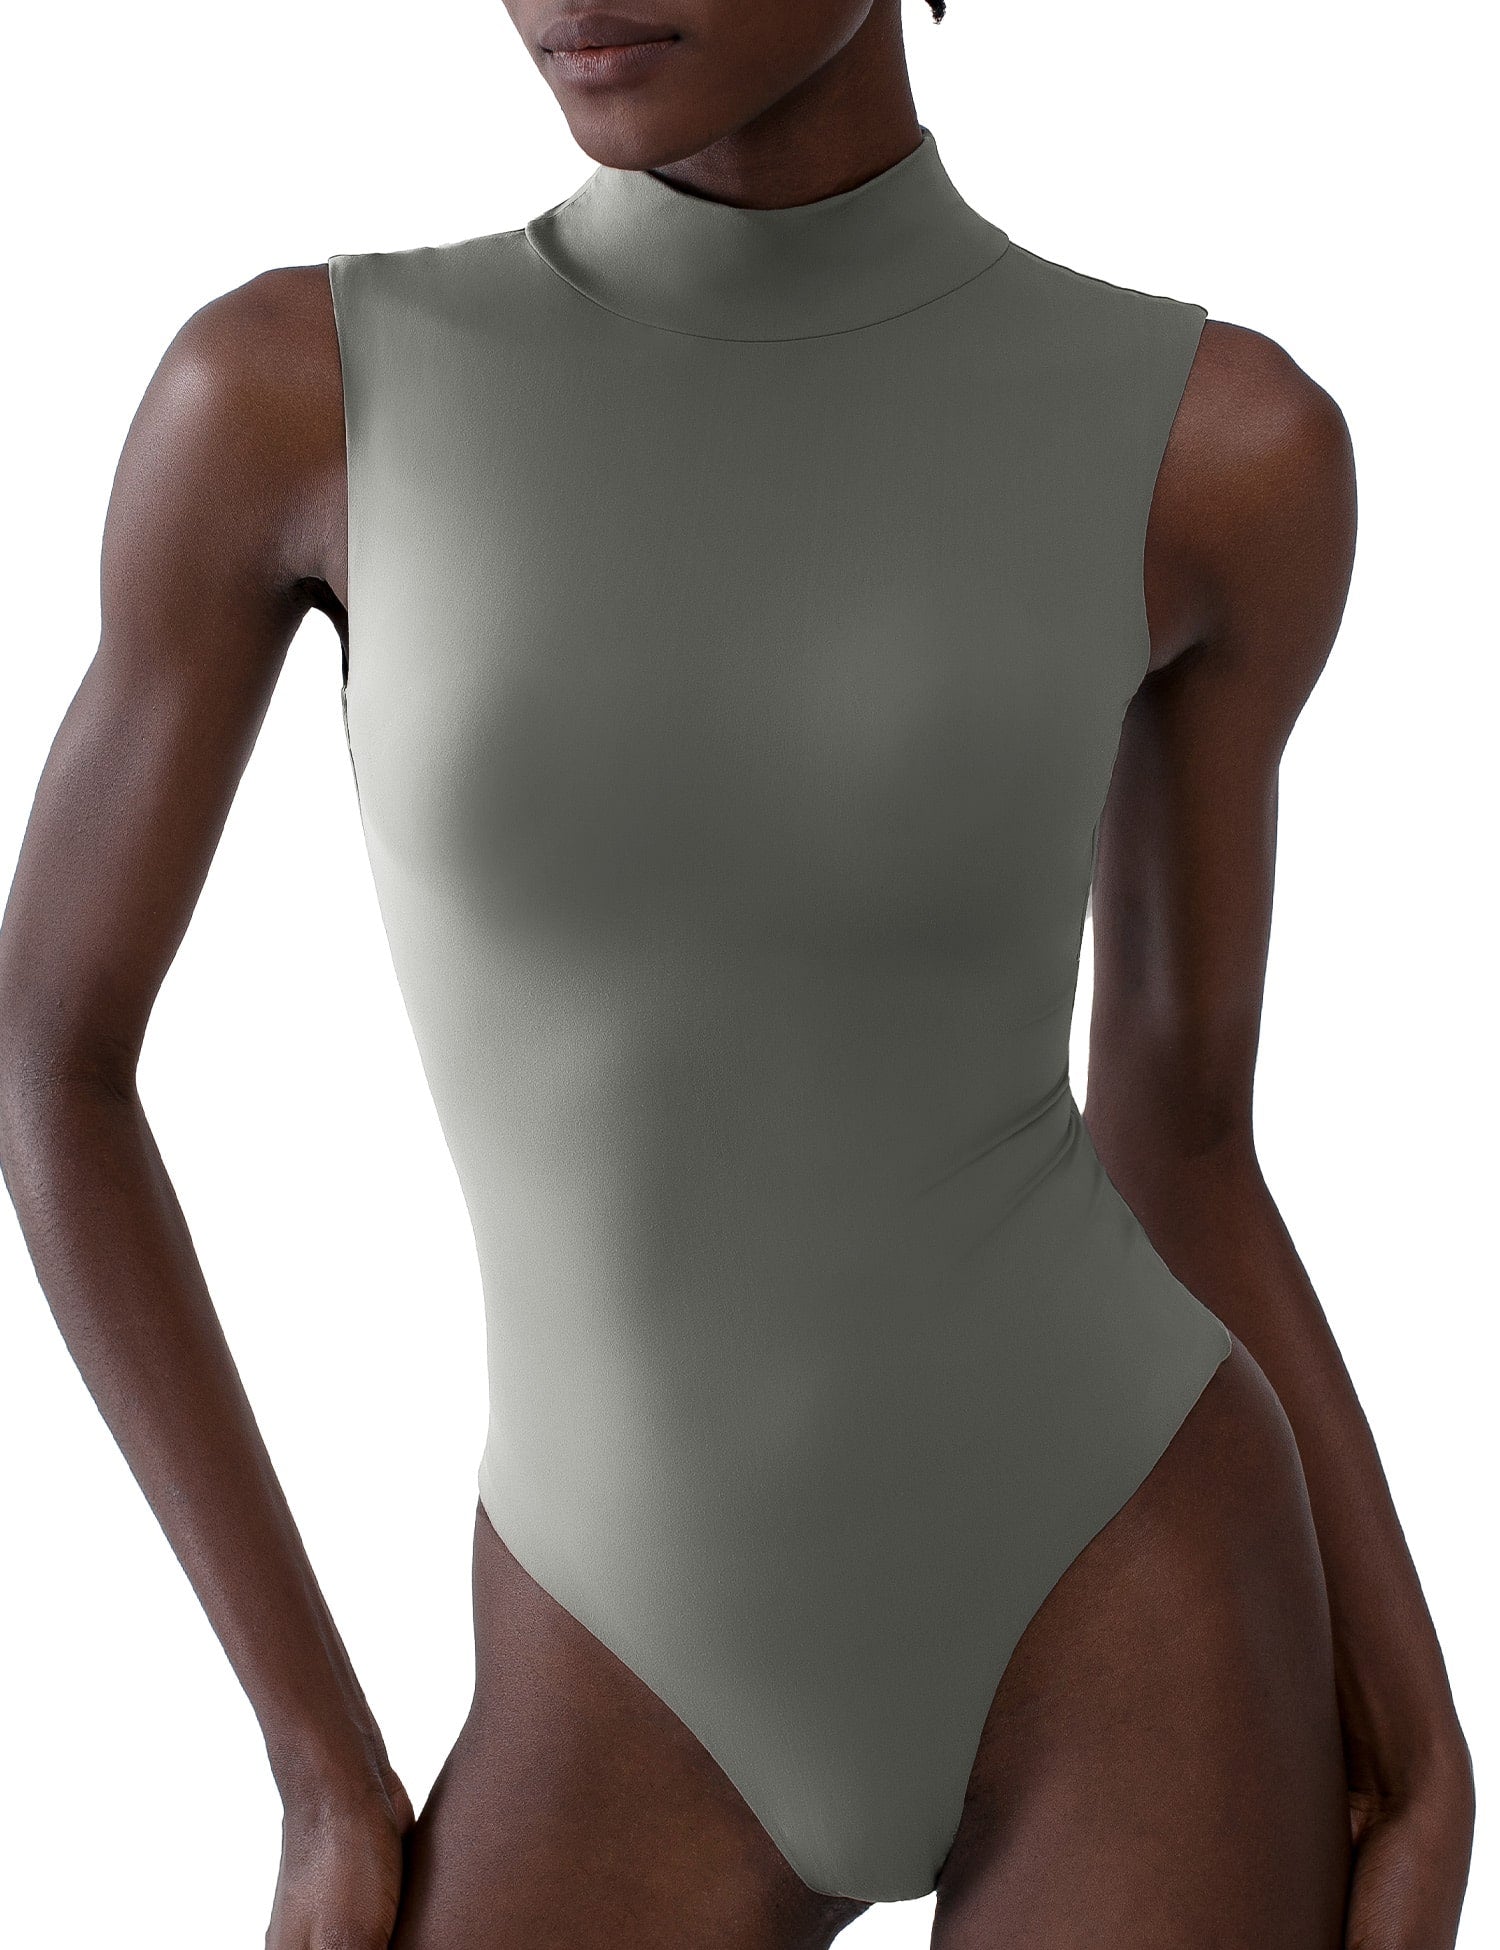  HGps8w Women's Mock Turtle Neck Sleeveless Bodysuit